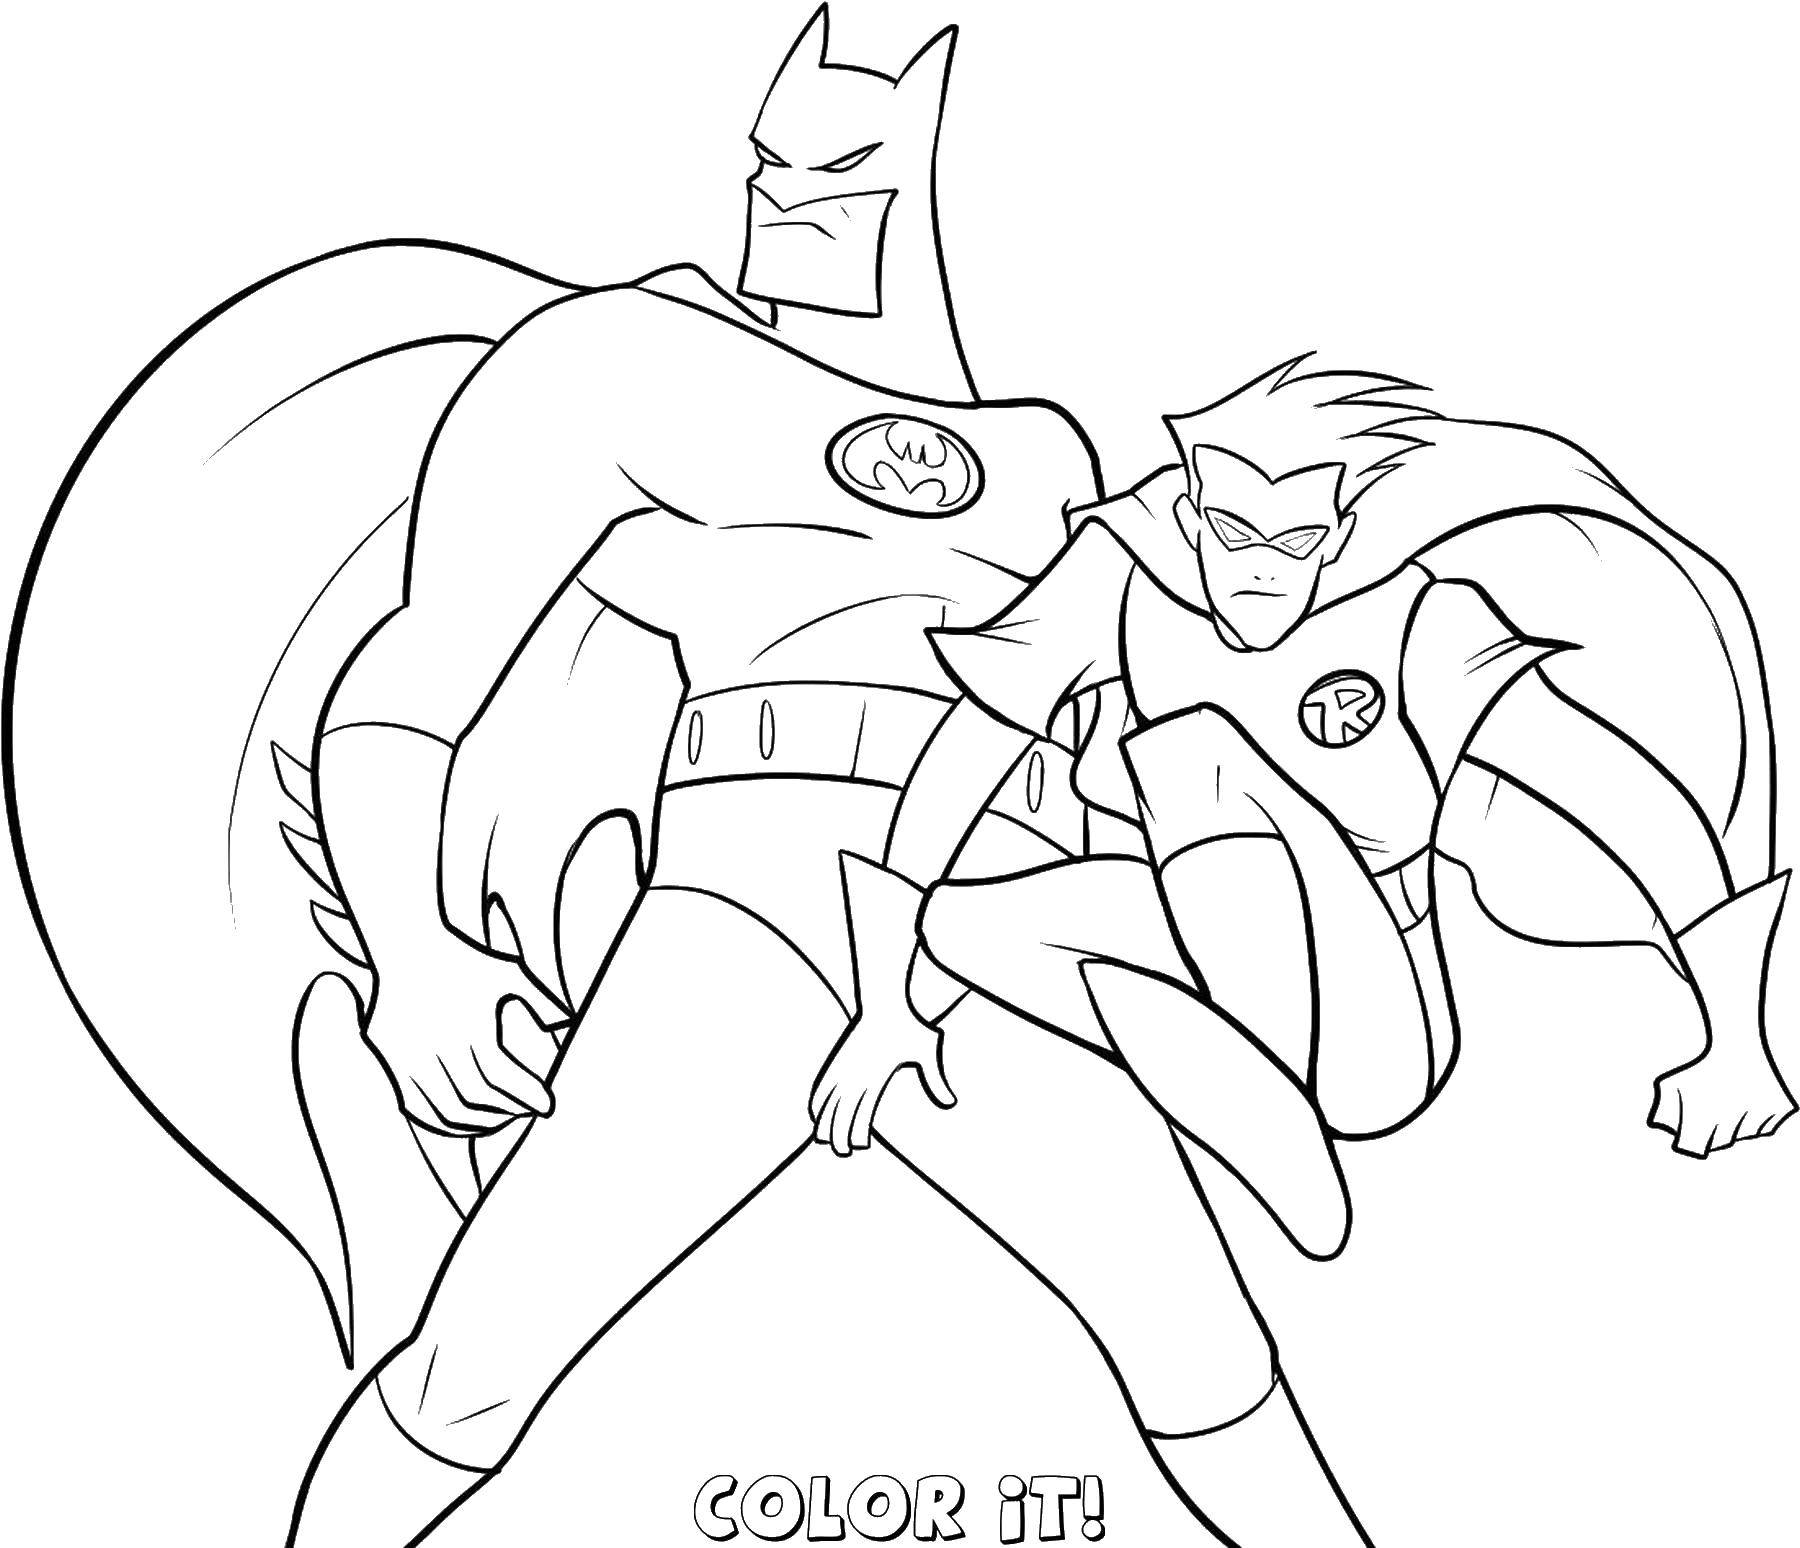 Coloring Batman and Robin rush to the aid. Category Batman. Tags:  Batman, superheroes.